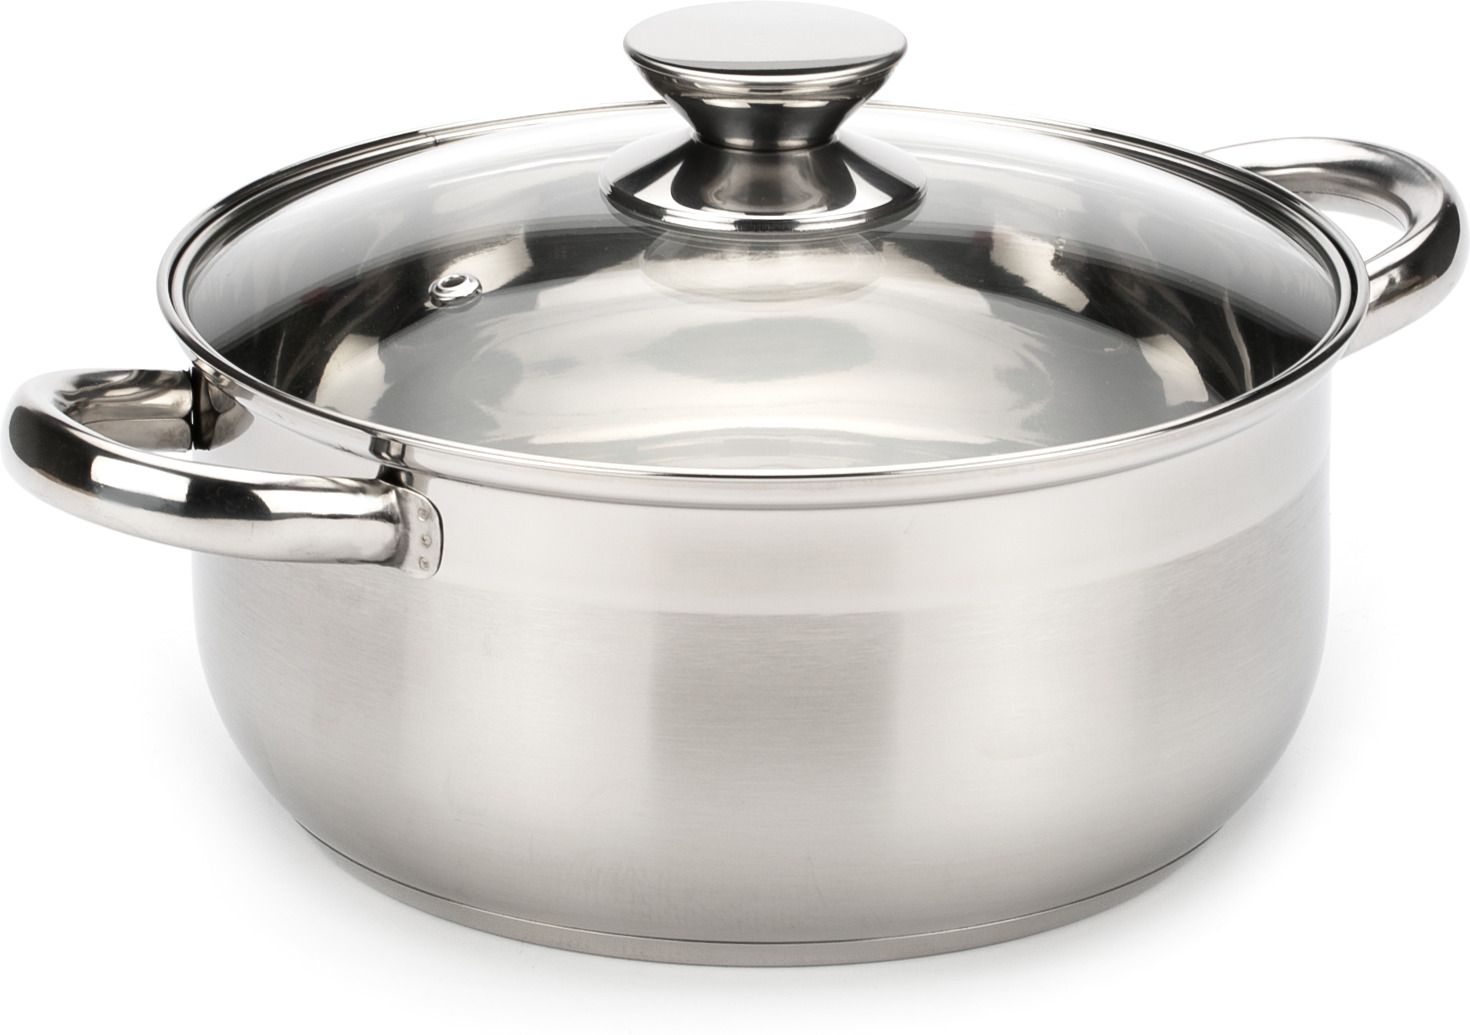 Посуда на букву а. Набор кастрюль attribute Steel Delice с крышкой 2 шт. Посуда восьмерка. Набор посуды 2686. Посуда 8 предметов Магнум.